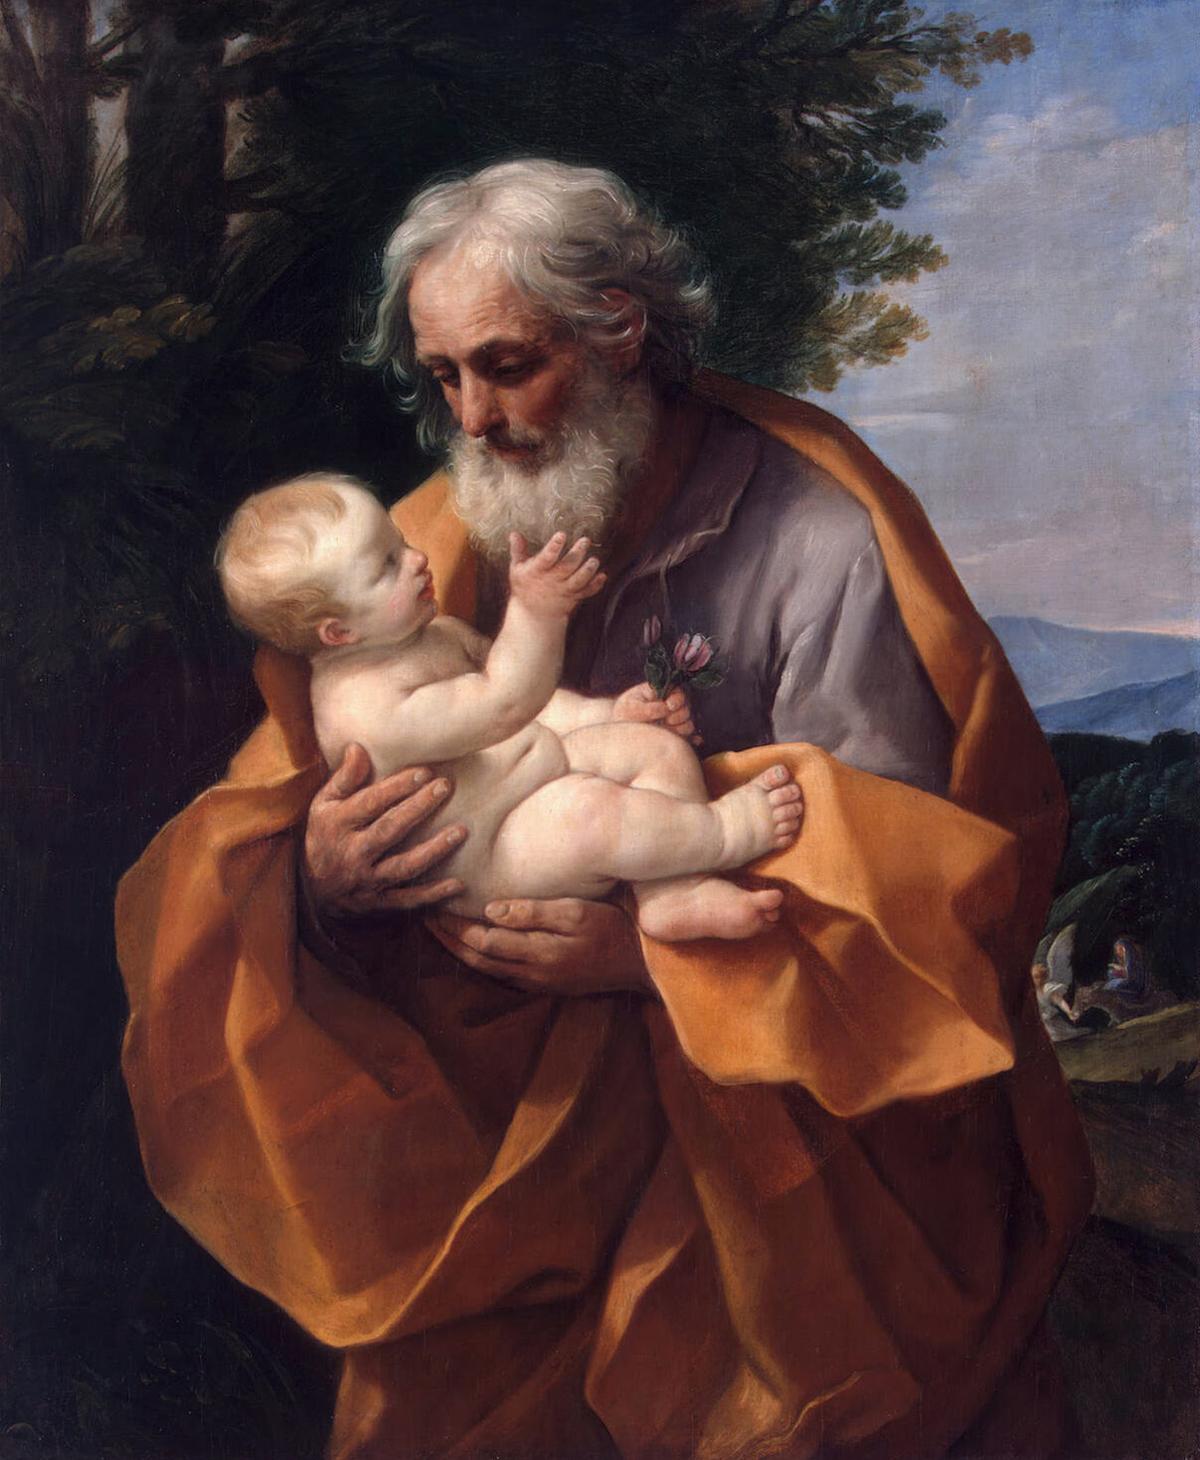 “Saint Joseph With the Infant Jesus,” c. 1635, by Guido Reni. (Public domain)